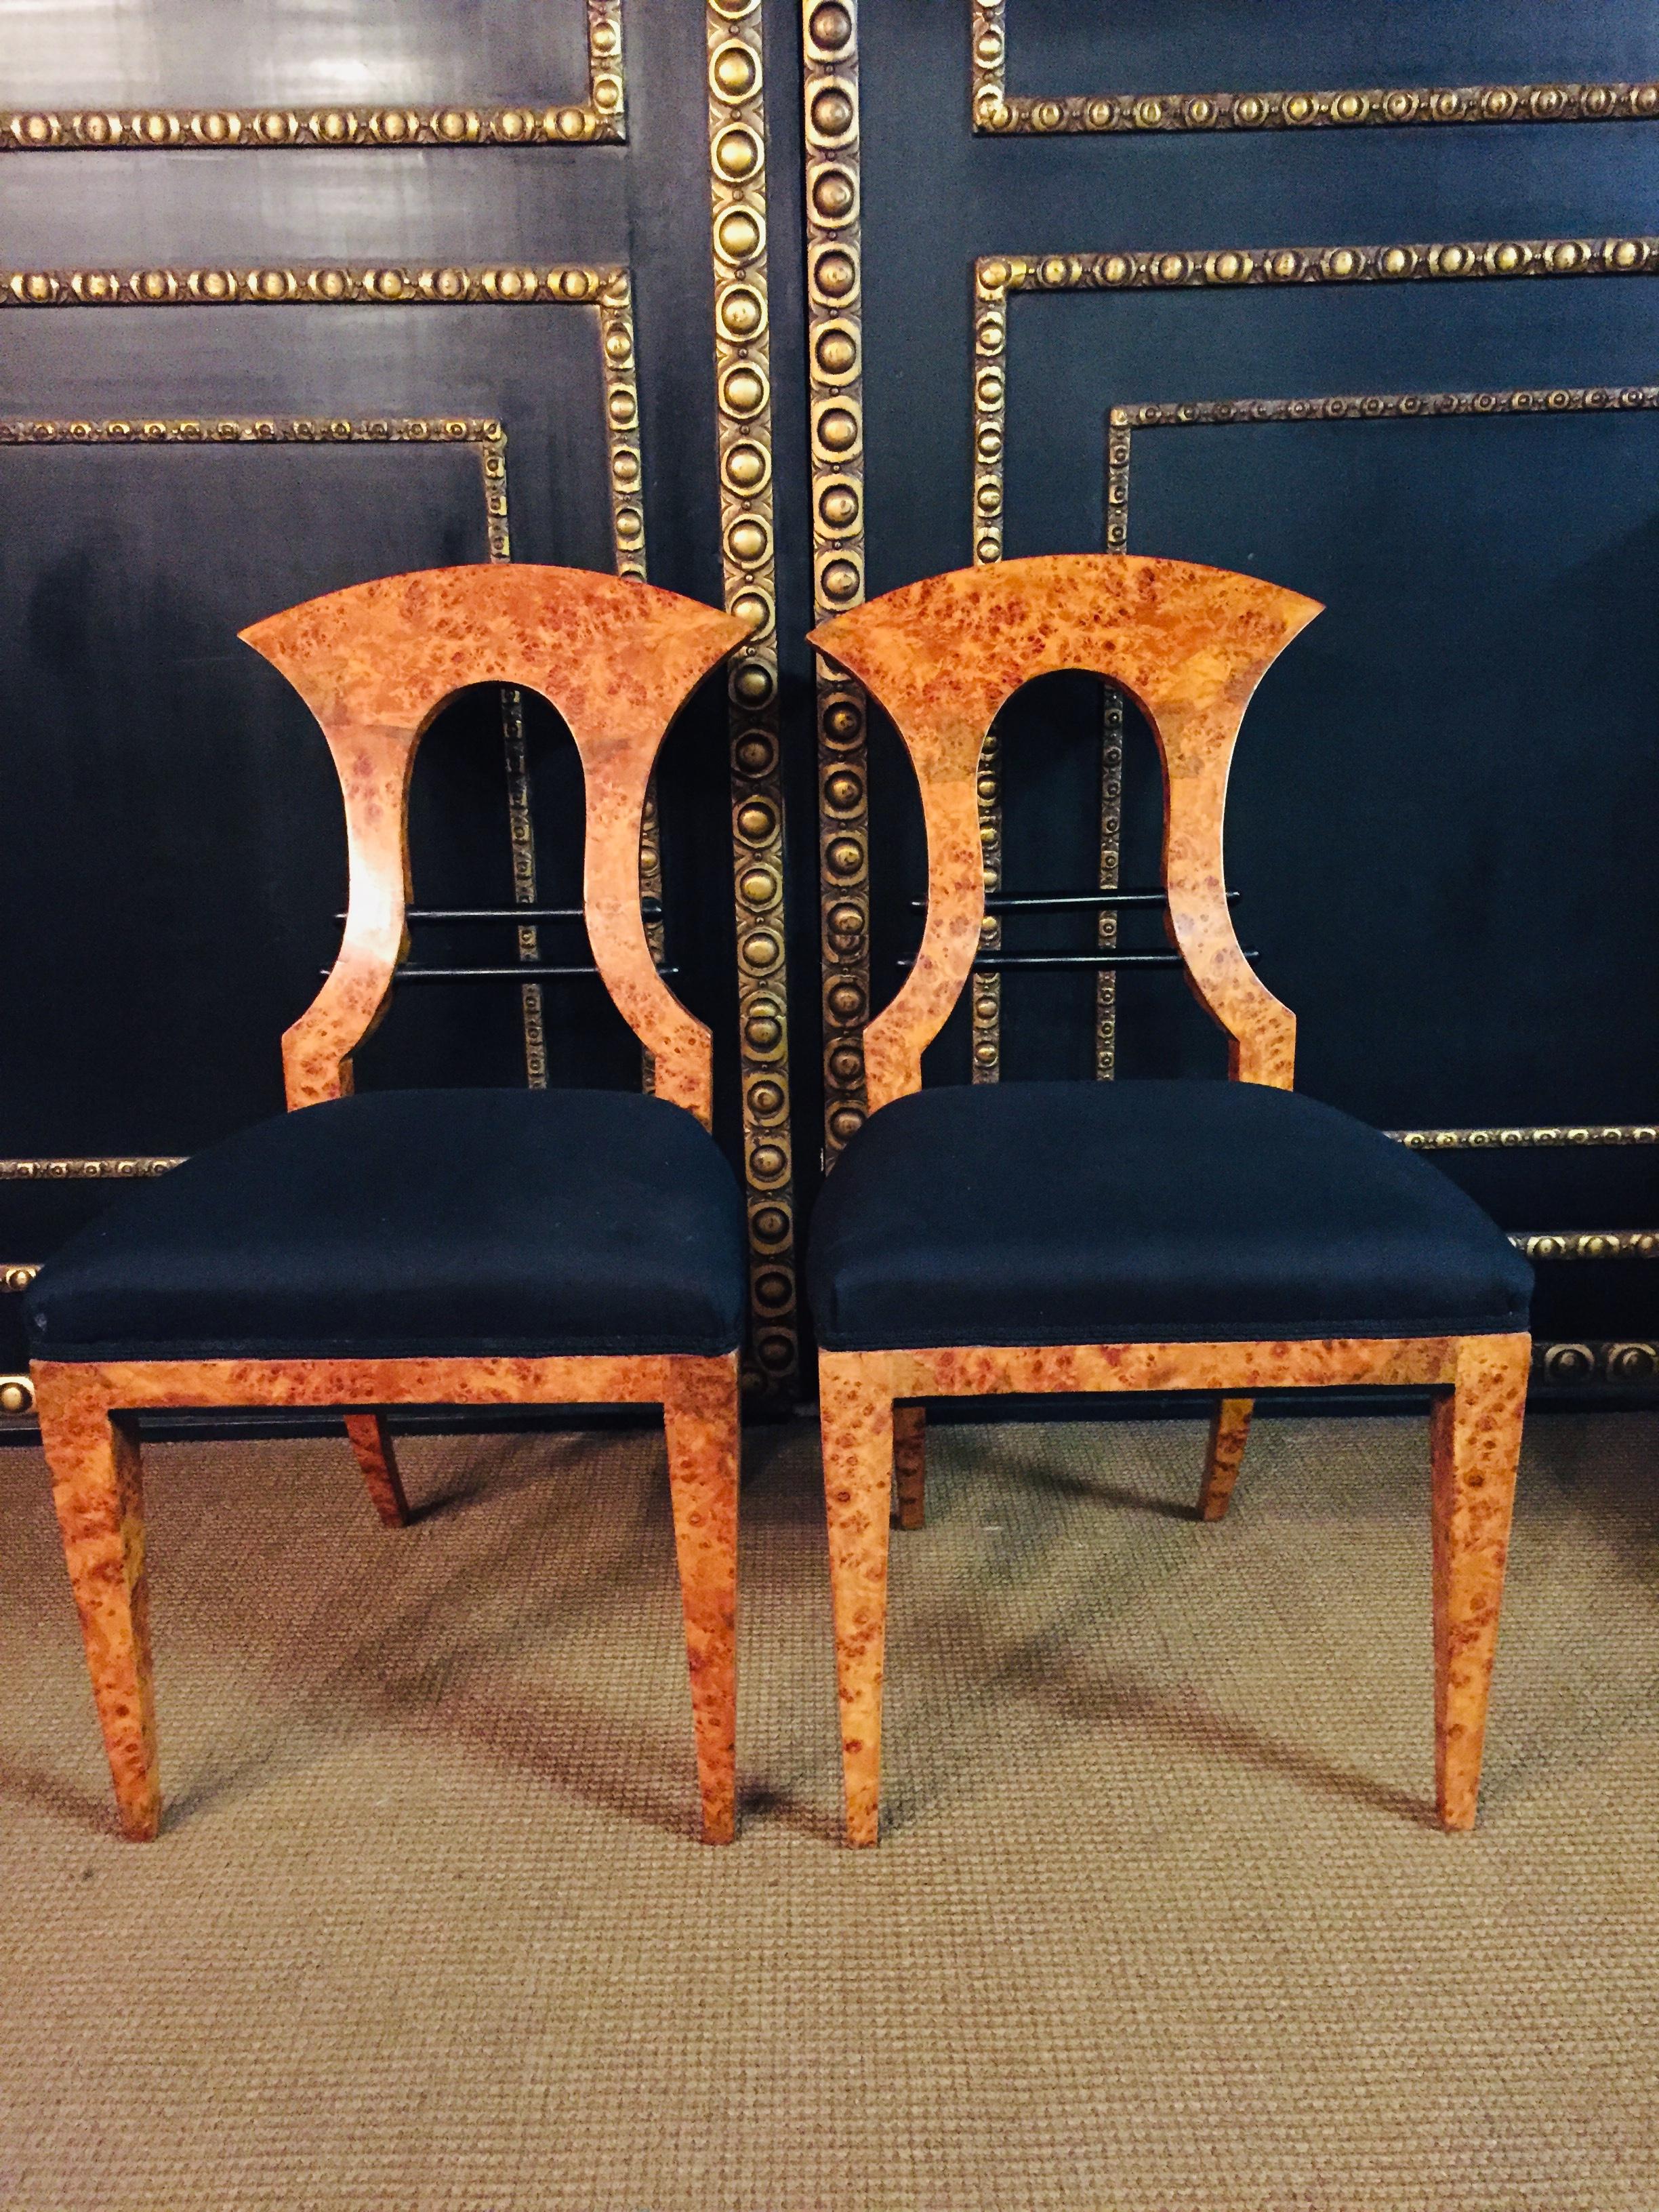 Vienna Biedermeier chairs after Josef Danhauser, 1805-1845. 
Maple Root on solid beechwood. Classical upholstering.